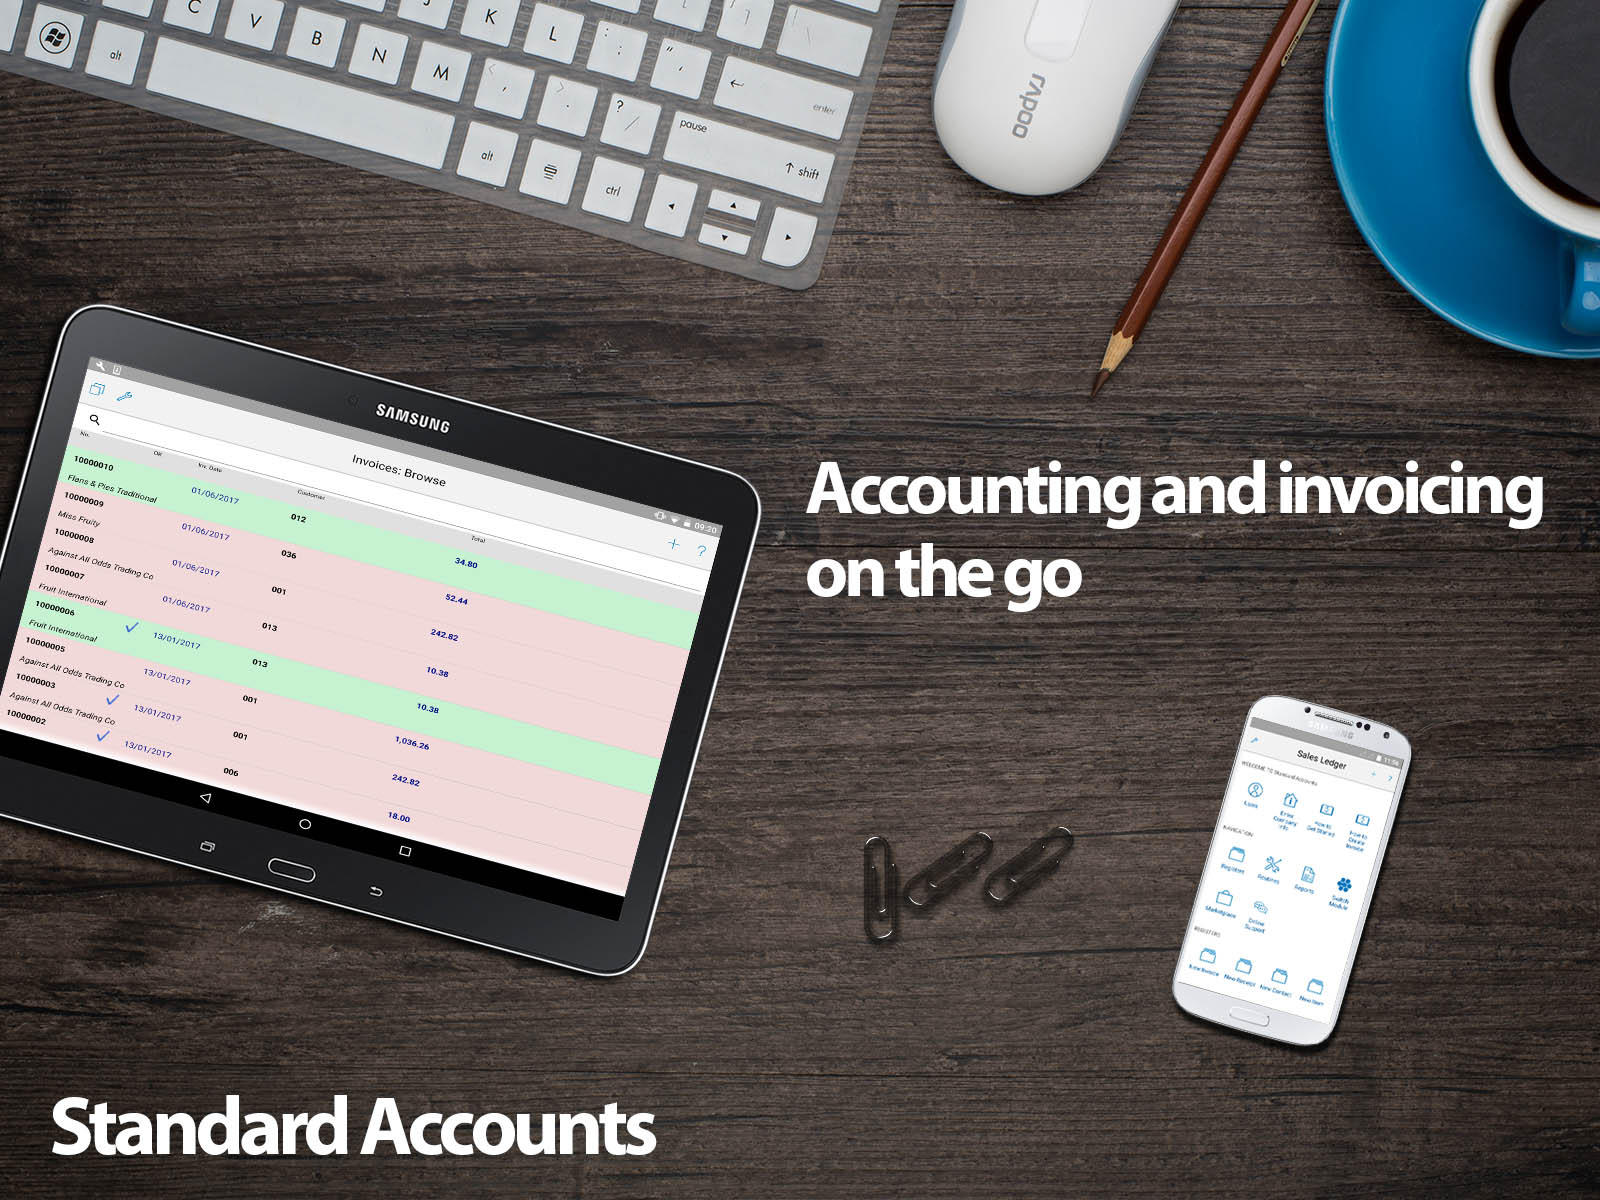 Standard Accounts